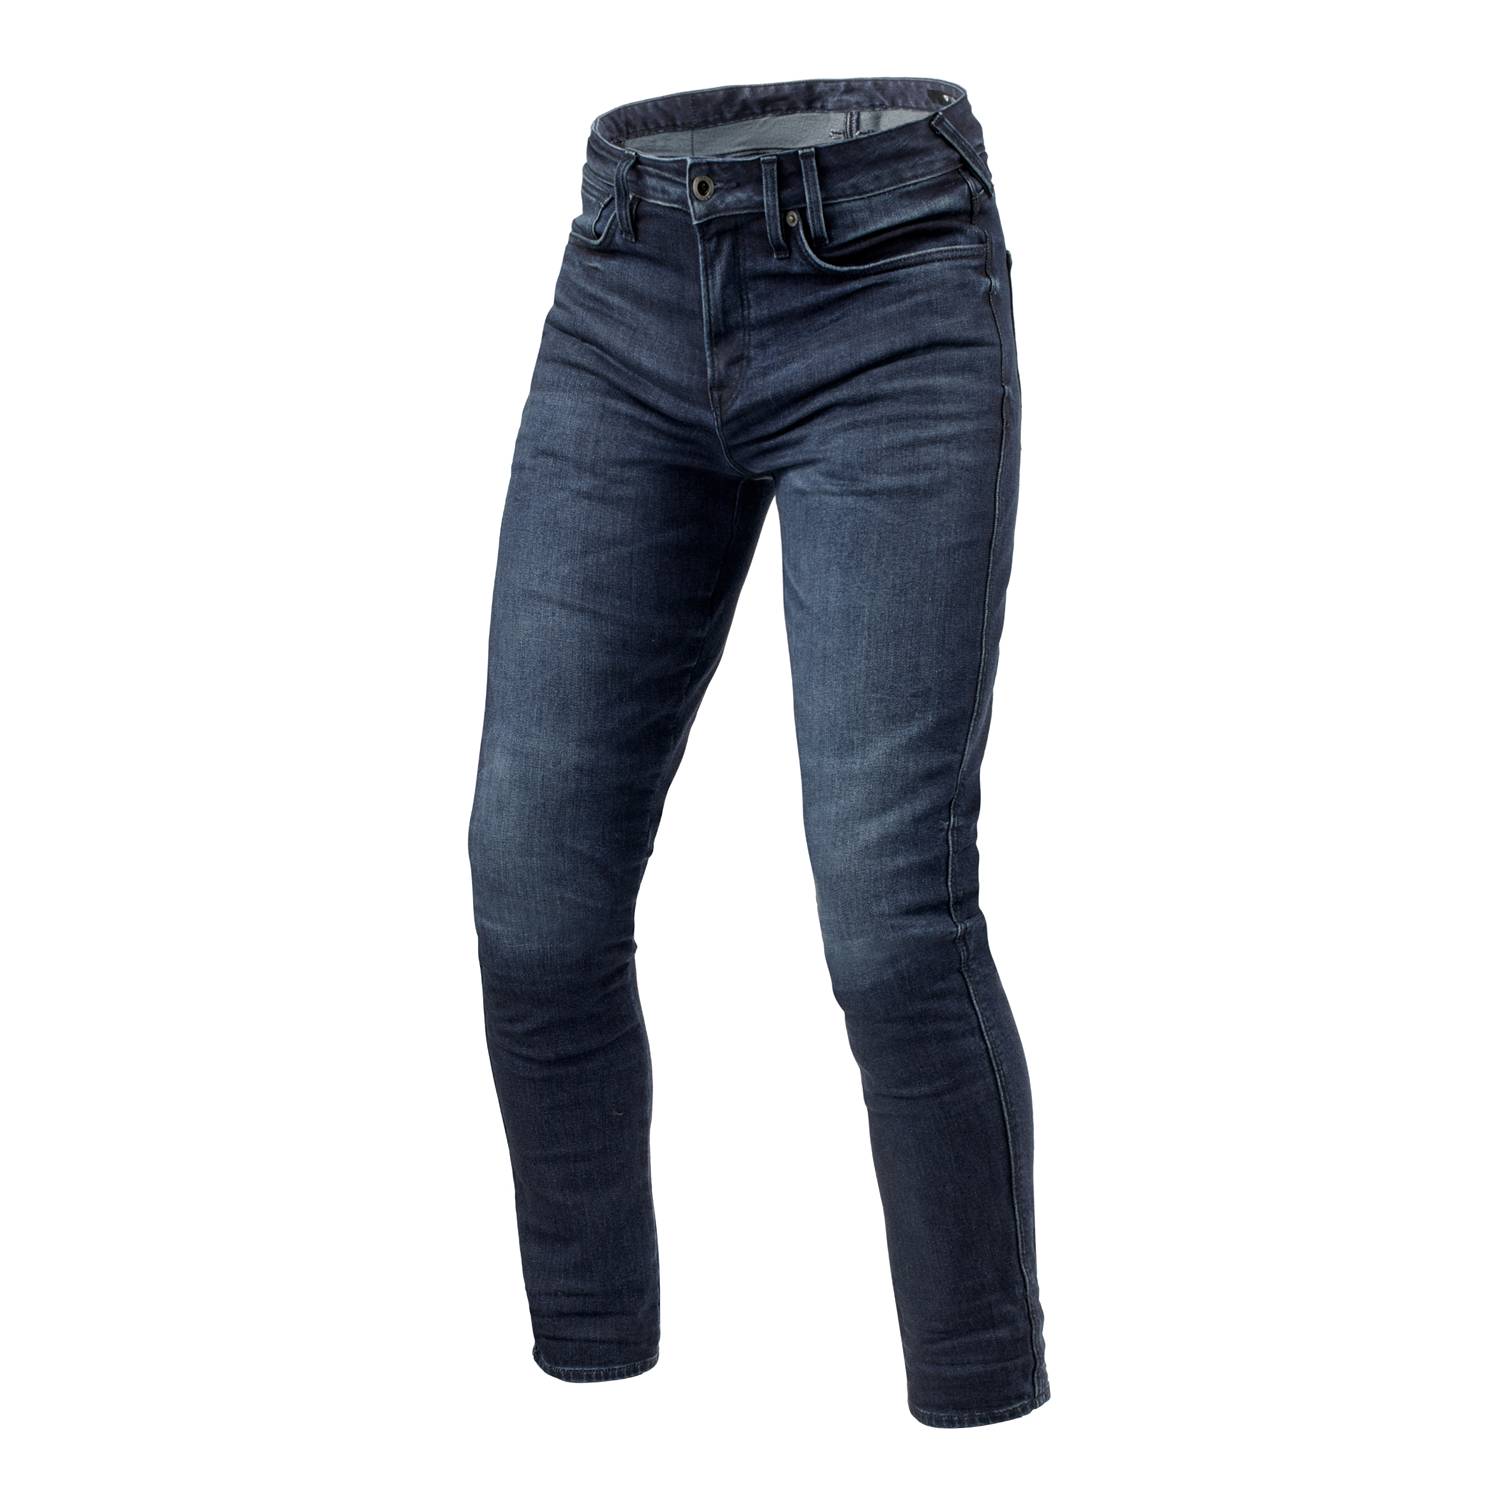 Image of REV'IT! Jeans Carlin SK Dark Blue Used L34 Motorcycle Jeans Größe L34/W32